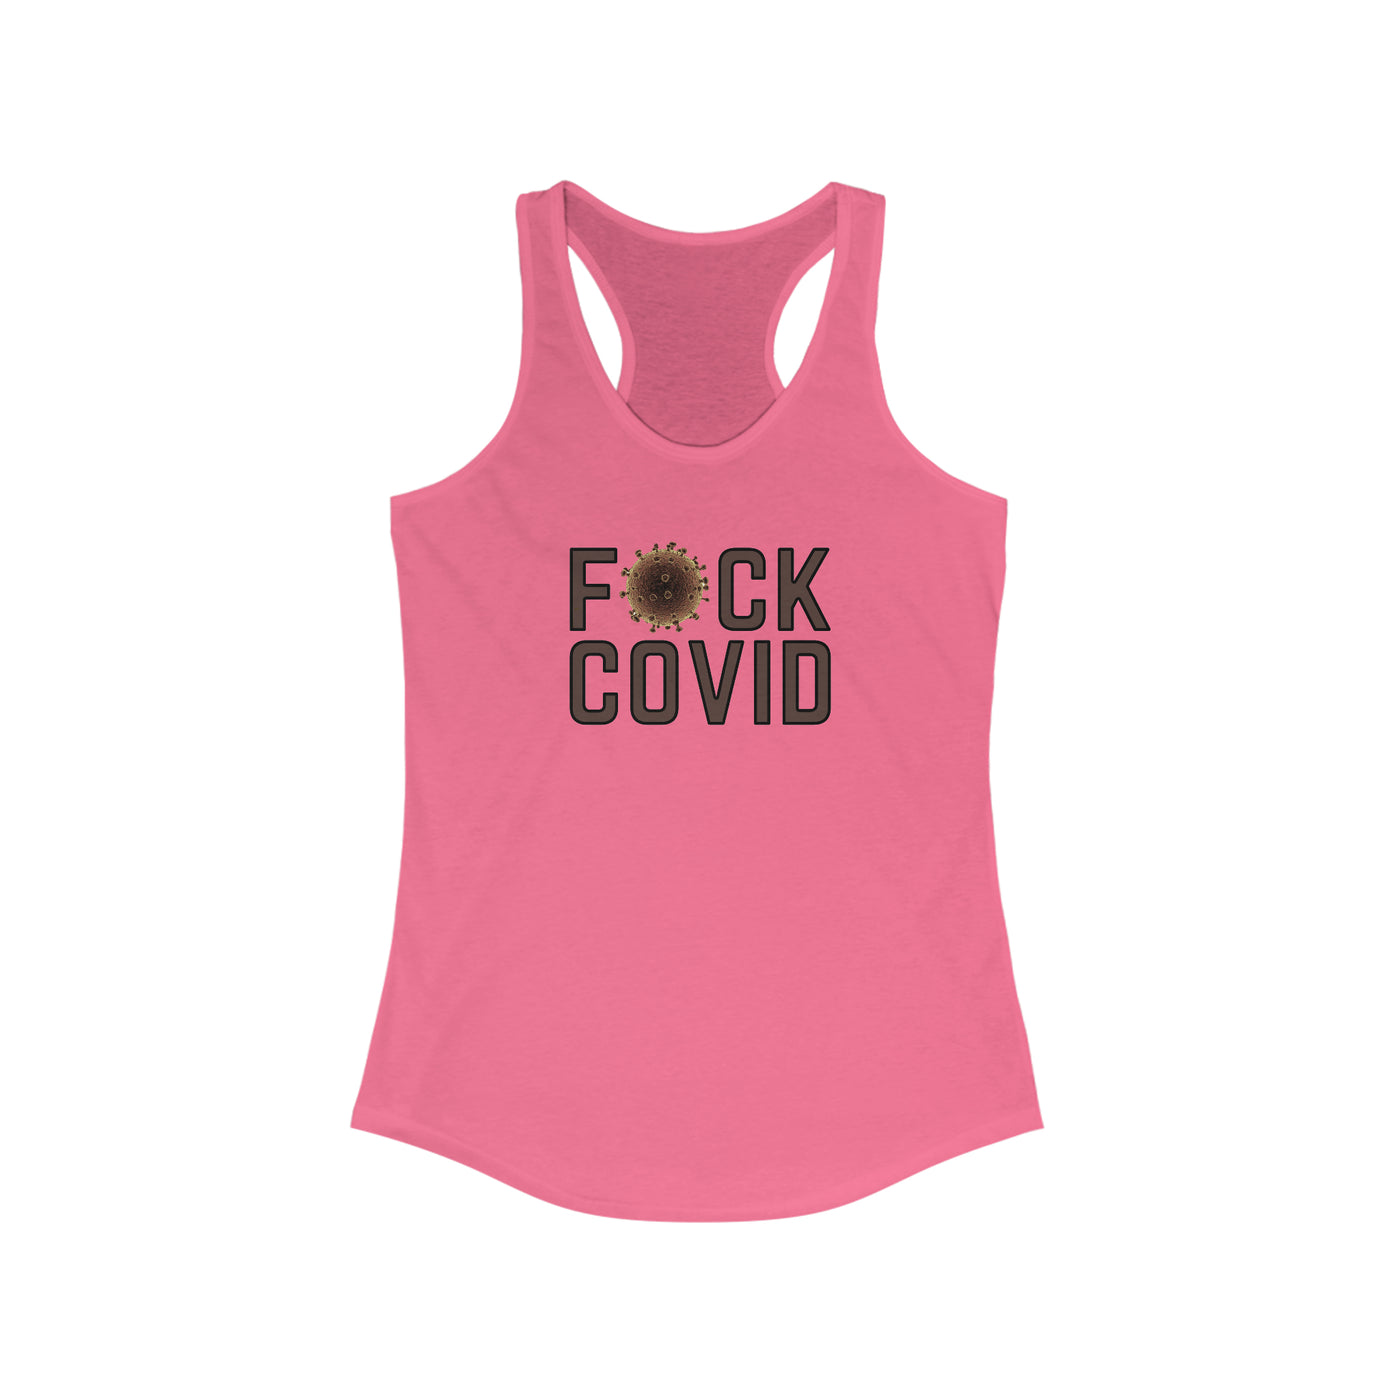 F*CK COVID Women's Racerback Tank